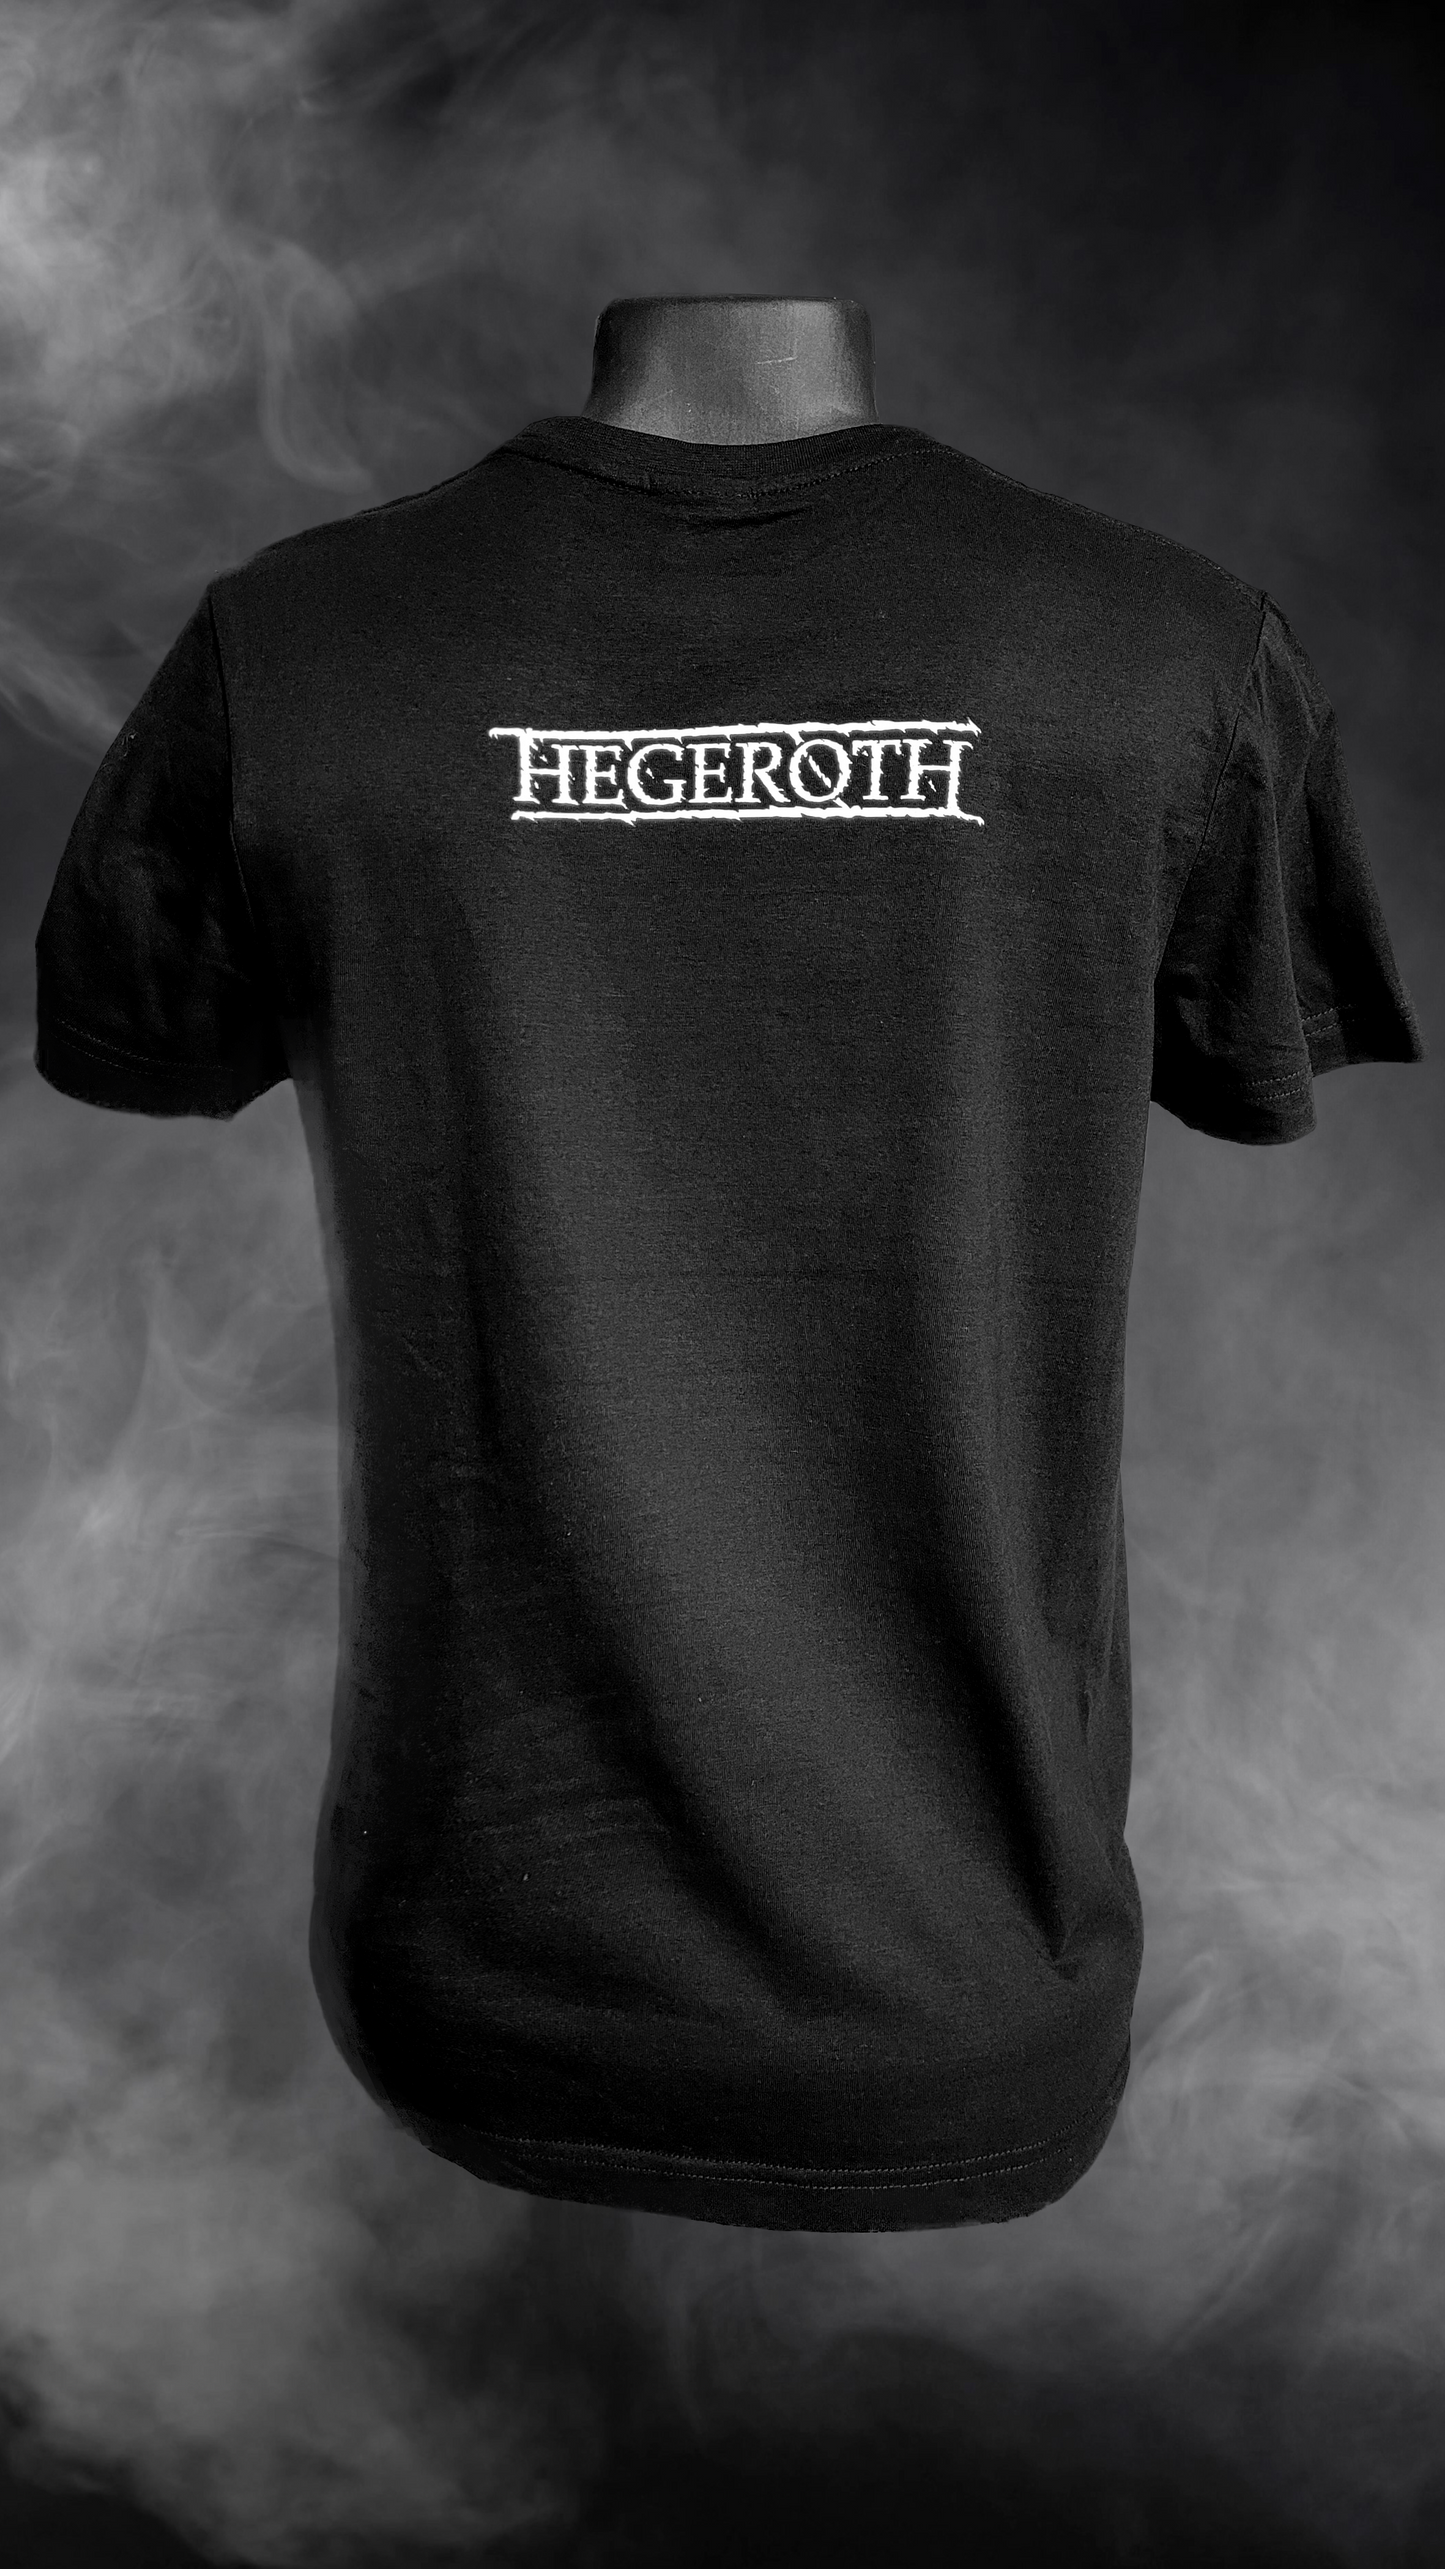 Hegeroth T-shirt - Skulls and trumpets